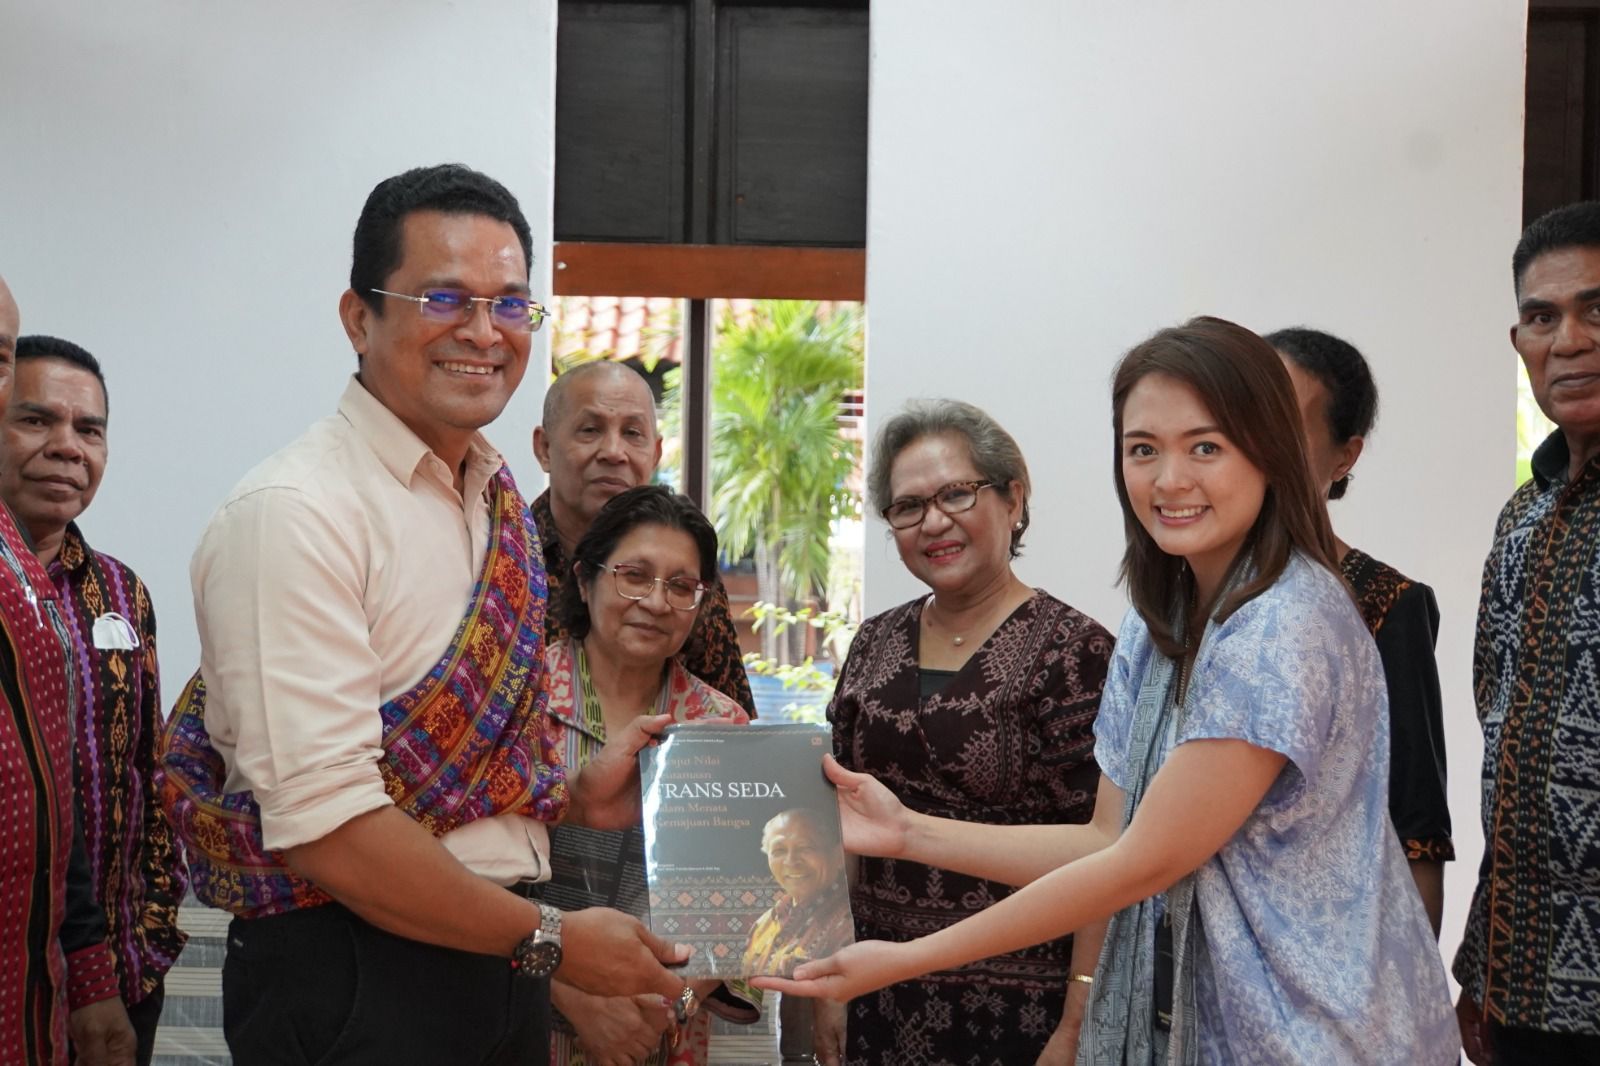 Keluarga Besar Maumere Jakarta Raya (KBM JAYA) menerima buku tentang Frans Seda dari Penerbit Gramedia Pustaka Utama.